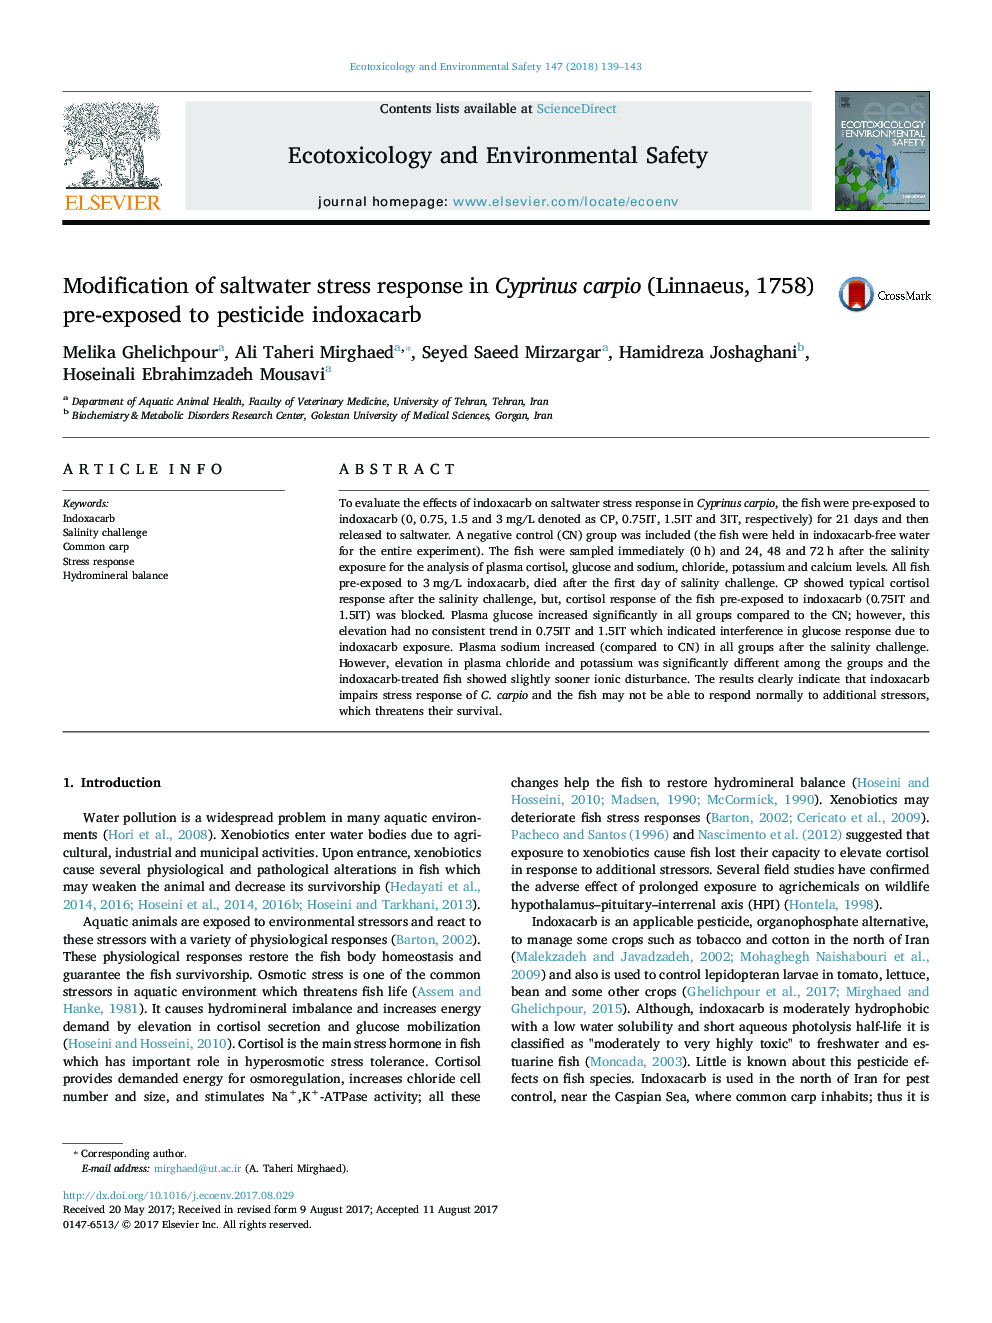 Modification of saltwater stress response in Cyprinus carpio (Linnaeus, 1758) pre-exposed to pesticide indoxacarb